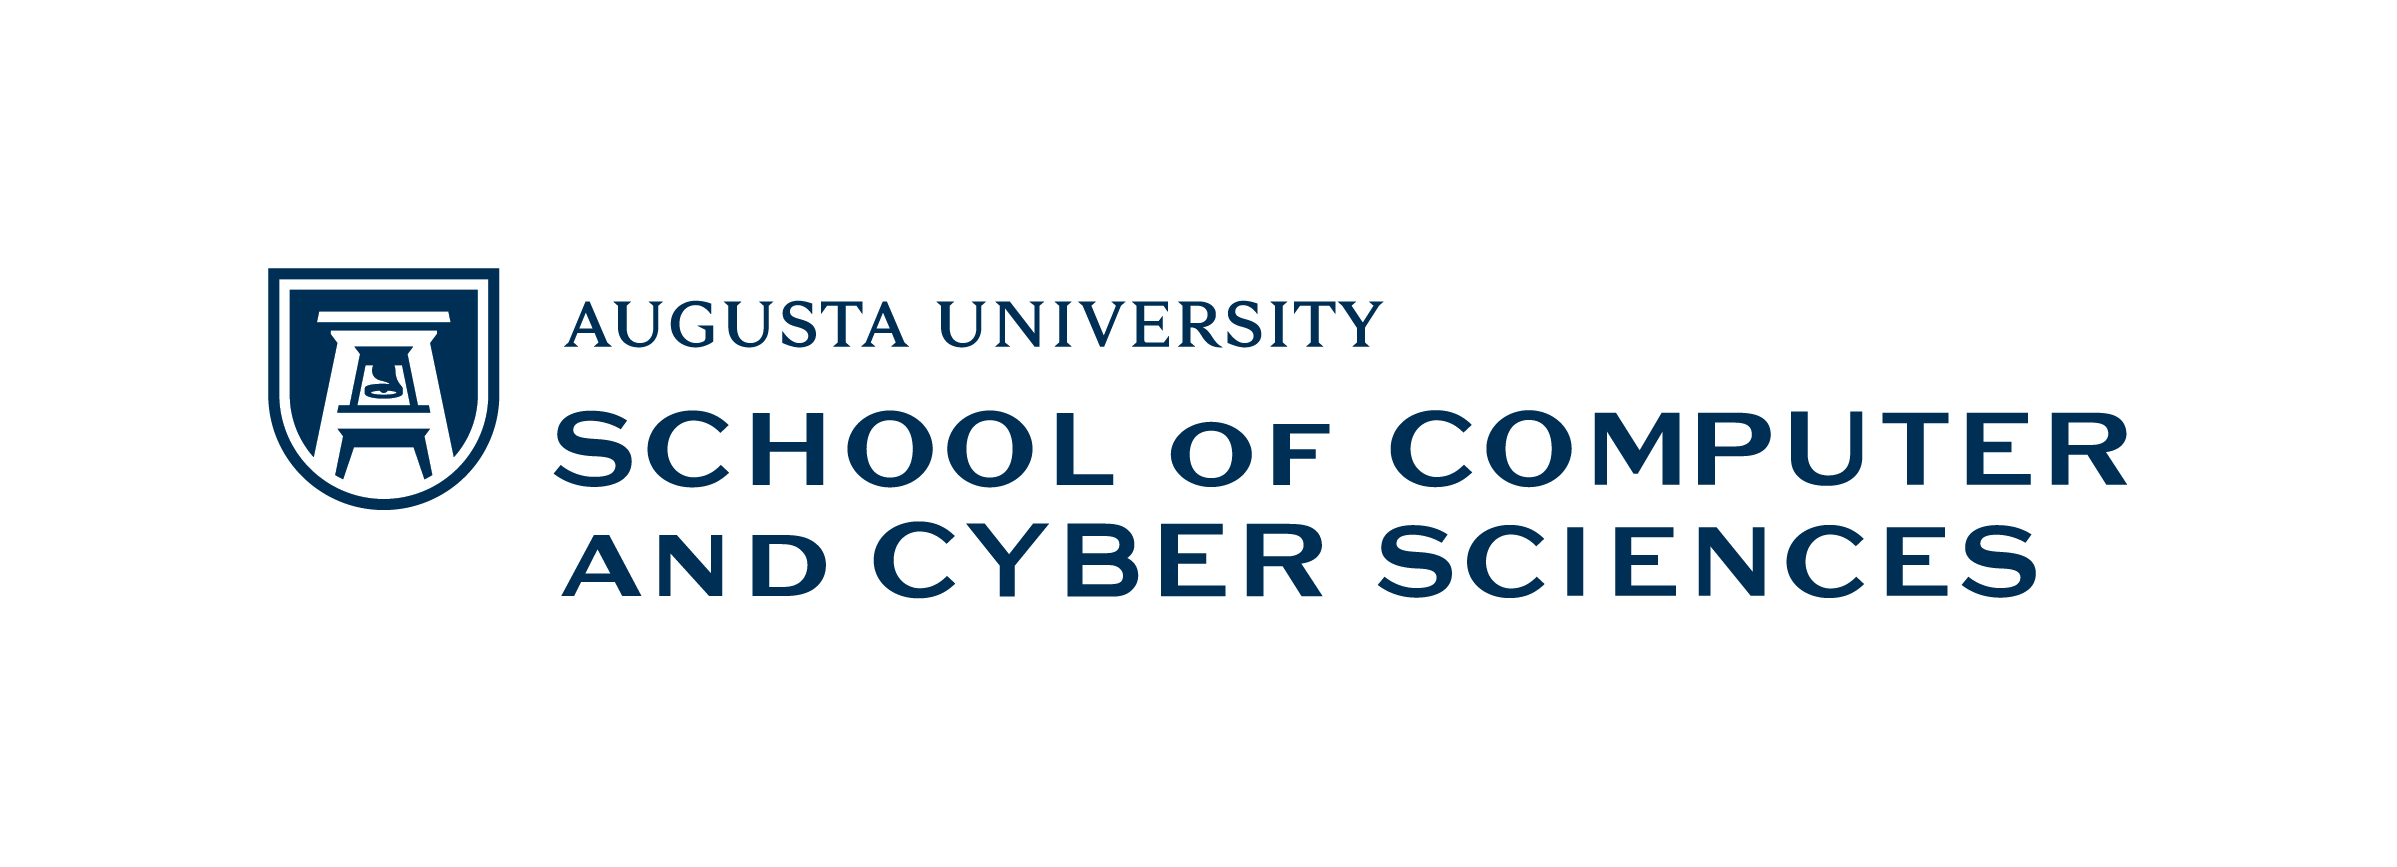 Augusta University - School of Computer & Cyber Sciences